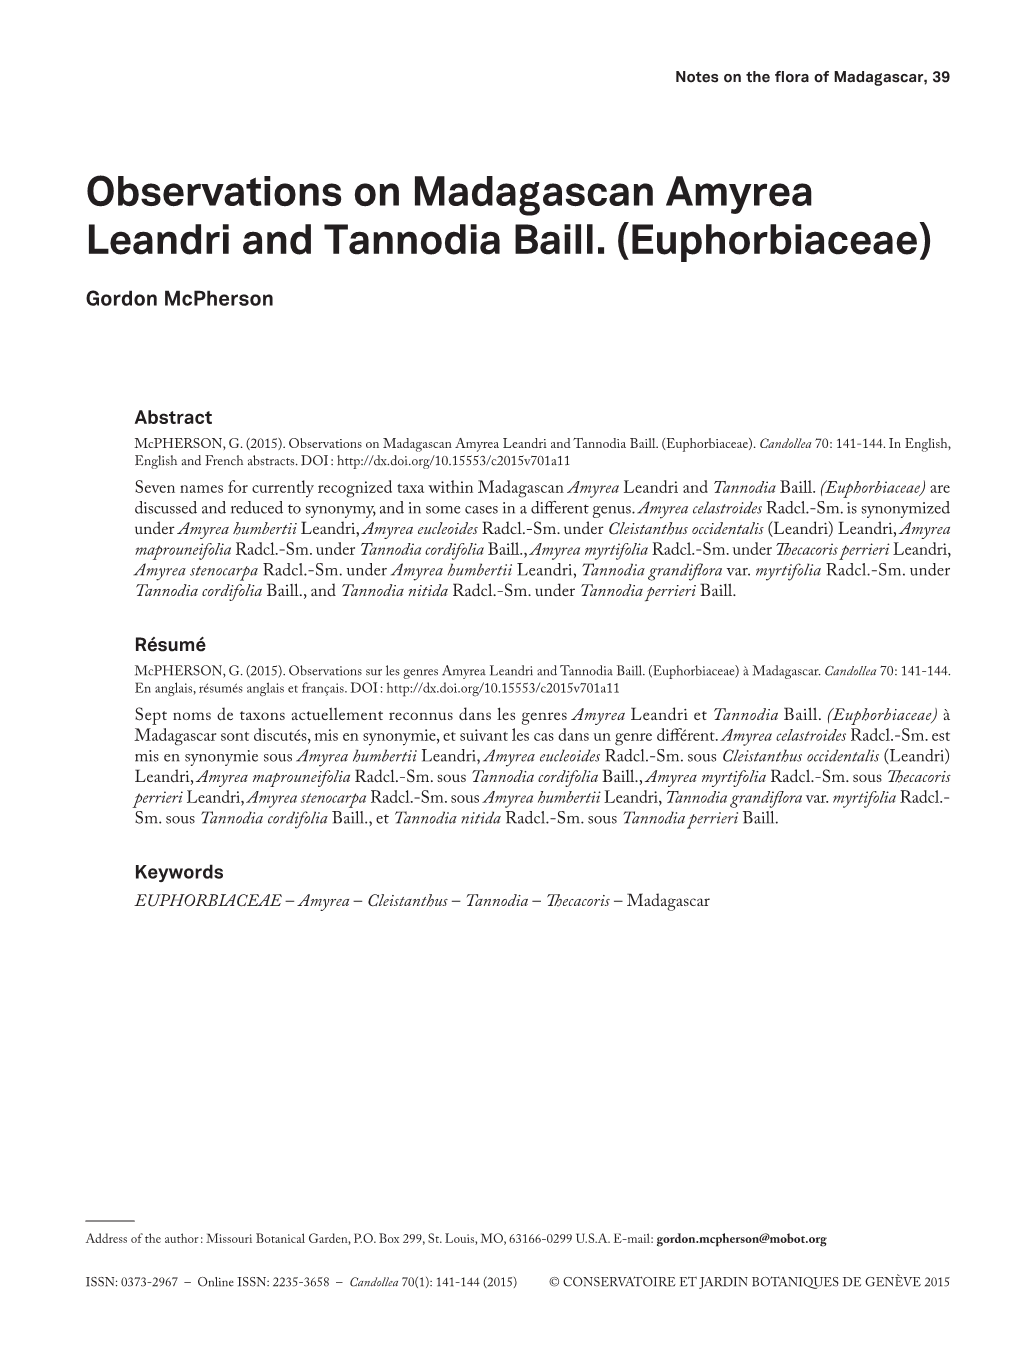 Observations on Madagascan Amyrea Leandri and Tannodia Baill. (Euphorbiaceae)